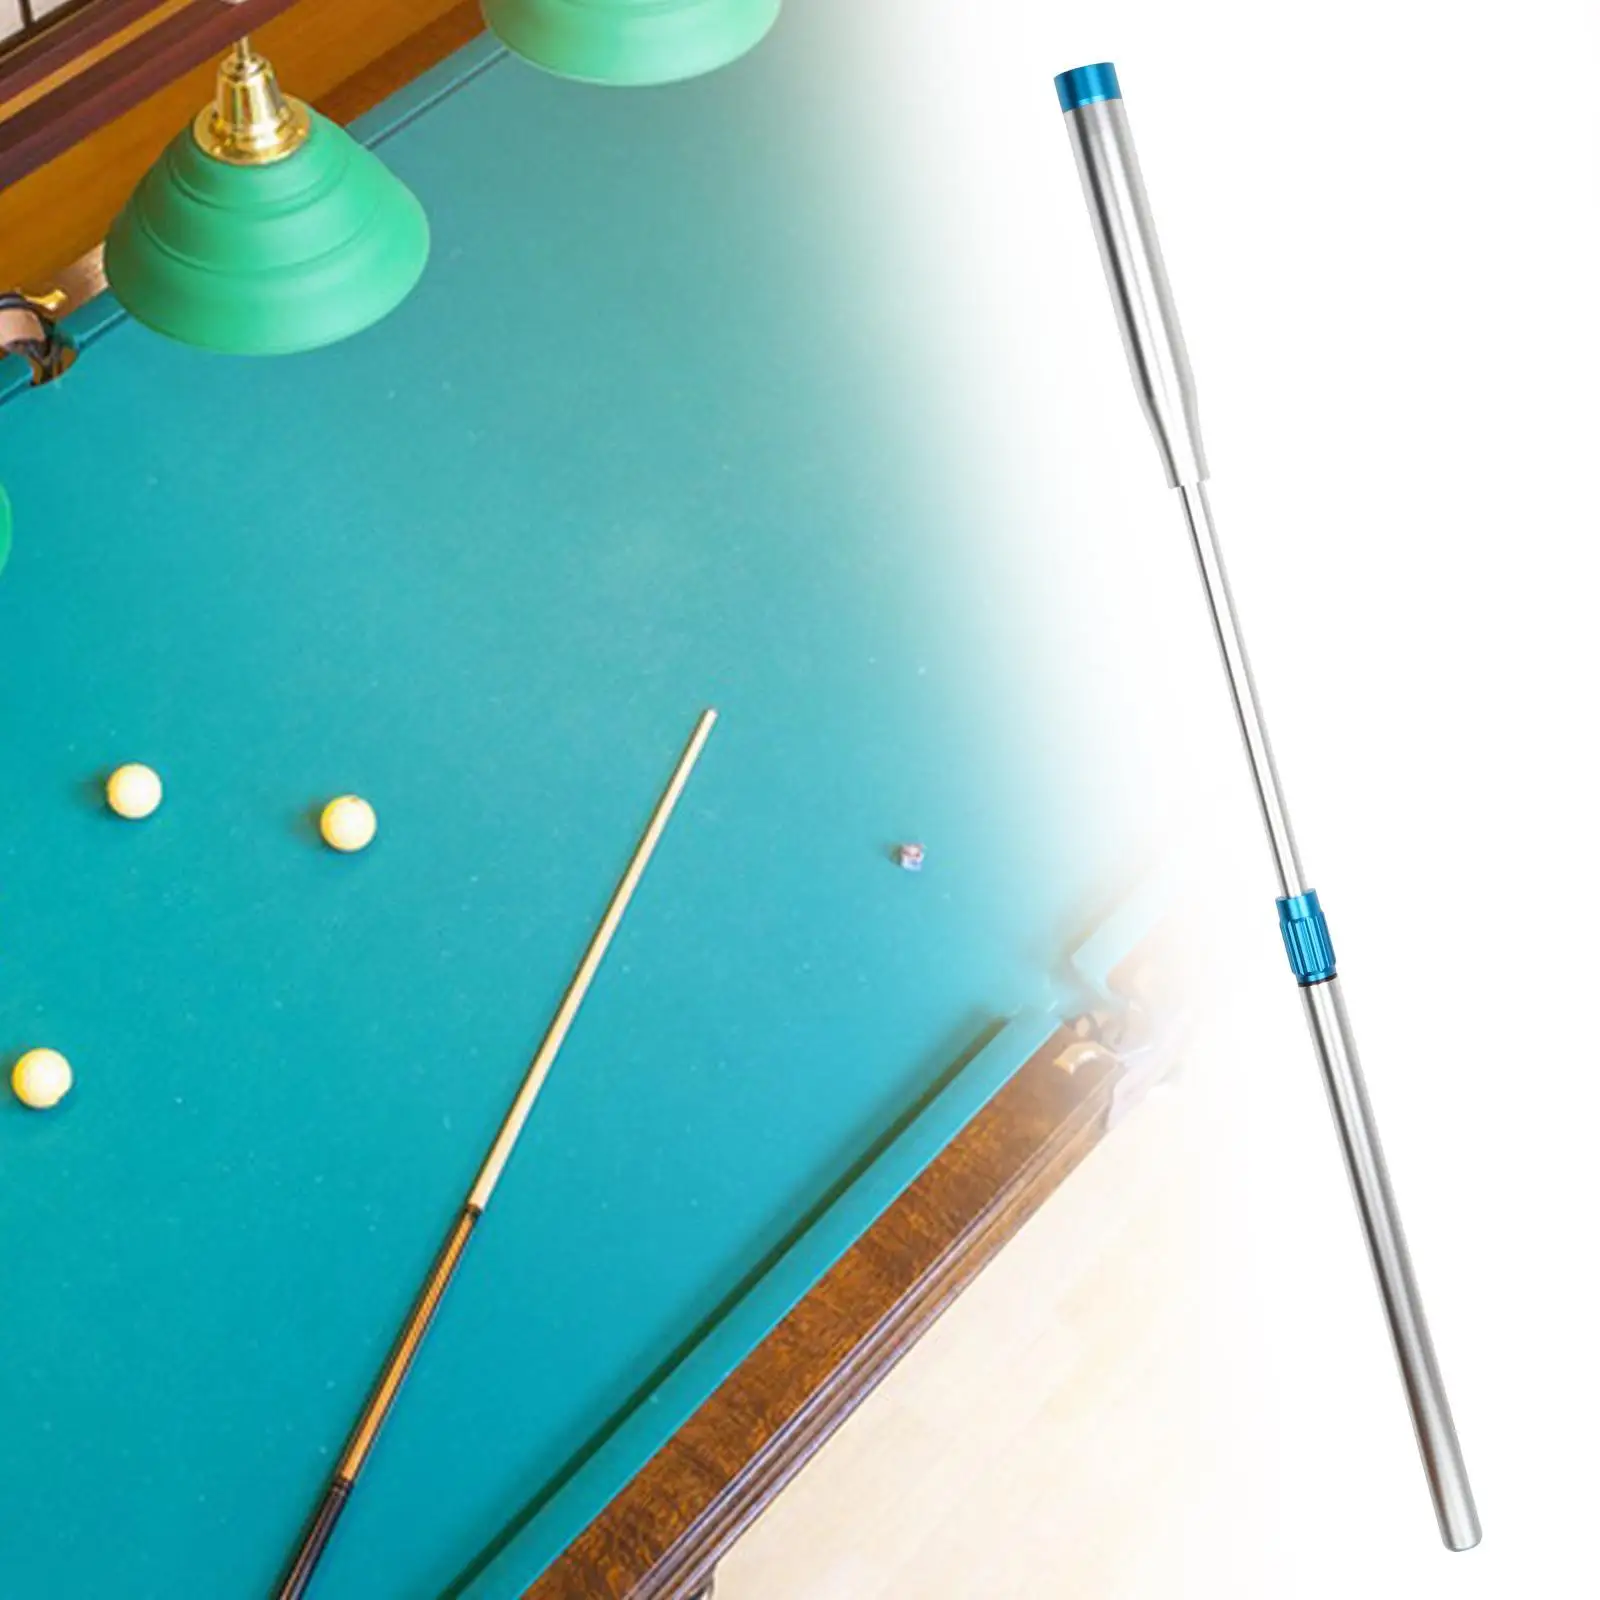 Snooker Pool Cue Extension, Ultralight Tool, Telescopic Aluminum Alloy,